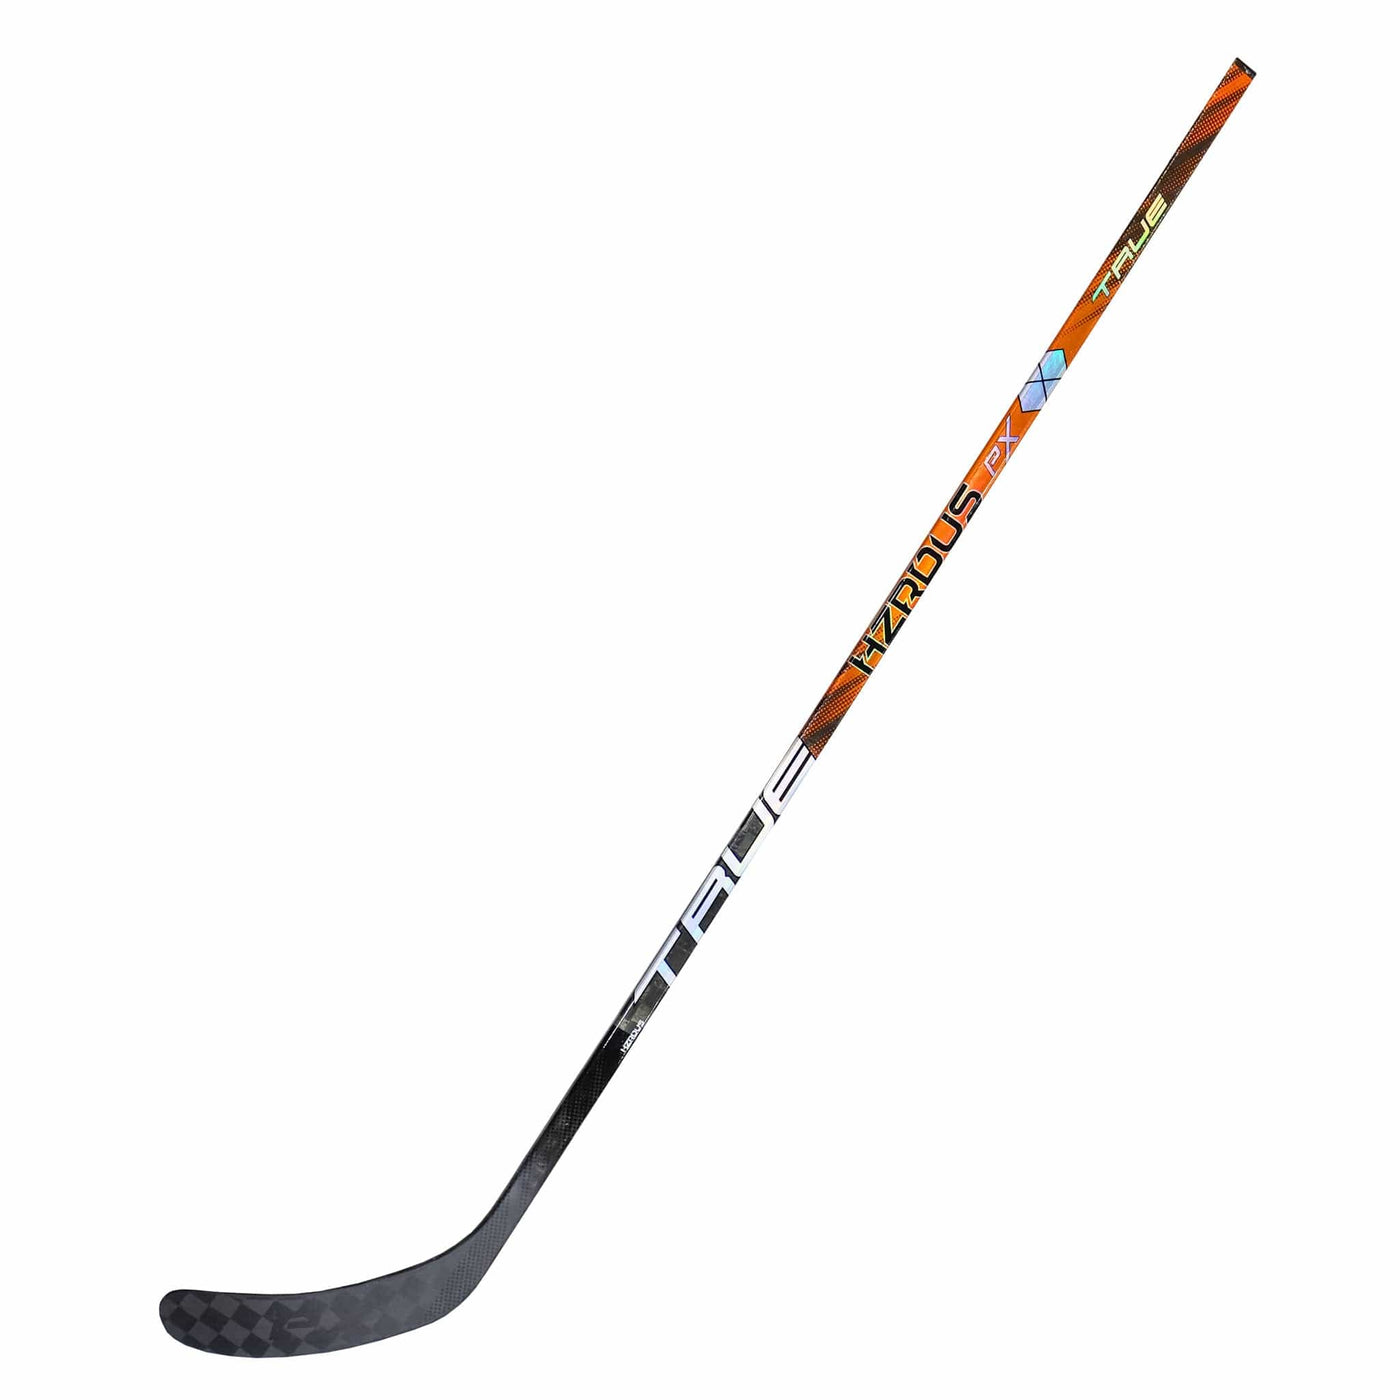 TRUE HZRDUS PX Junior Hockey Stick - 40 Flex - The Hockey Shop Source For Sports